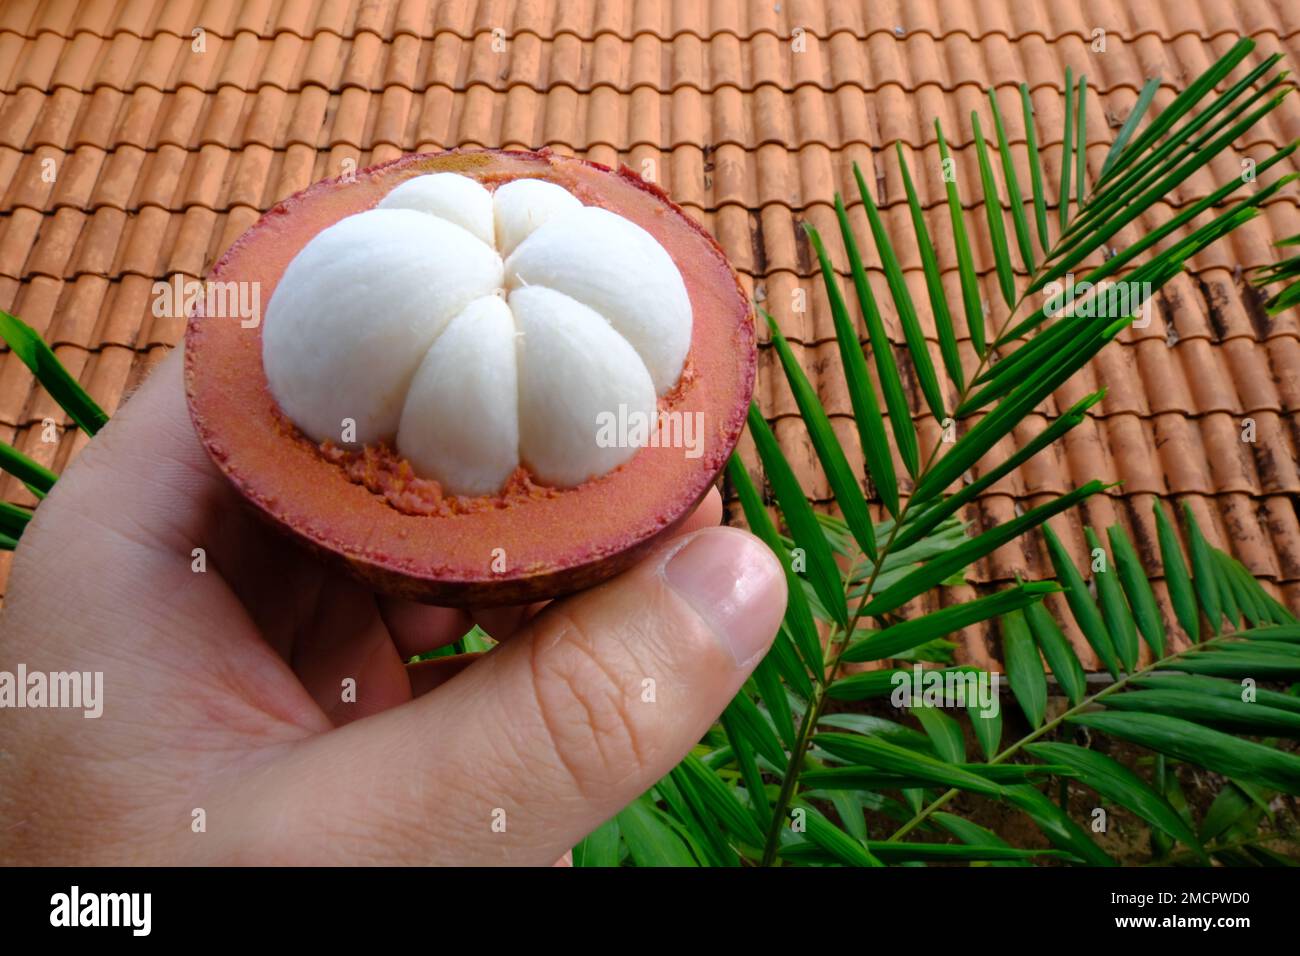 Indonesia Batam - Mangosteen - Garcinia mangostana Stock Photo